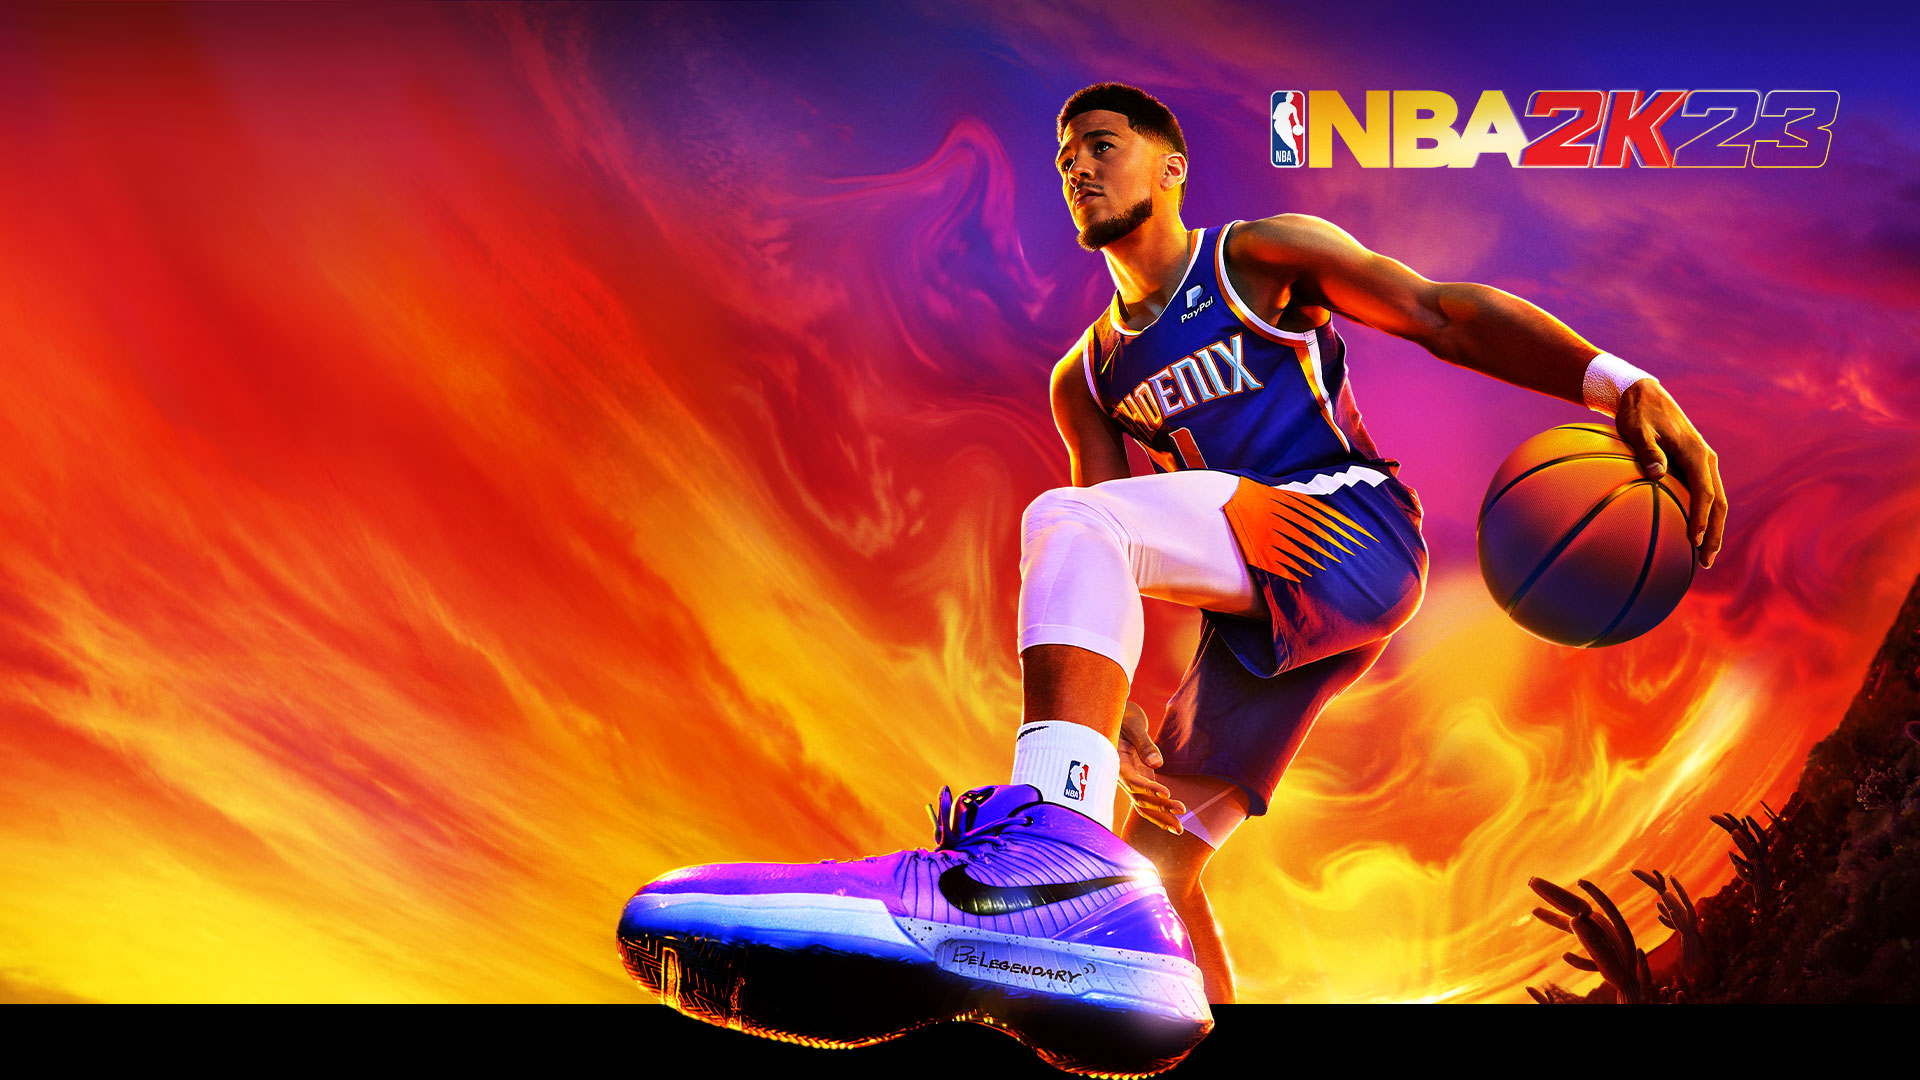 『NBA 2K23』、Phoenix Suns の背番号 1、Devin Booker が、砂漠の色鮮やかな空の下でバスケットボールをドリブルしている。